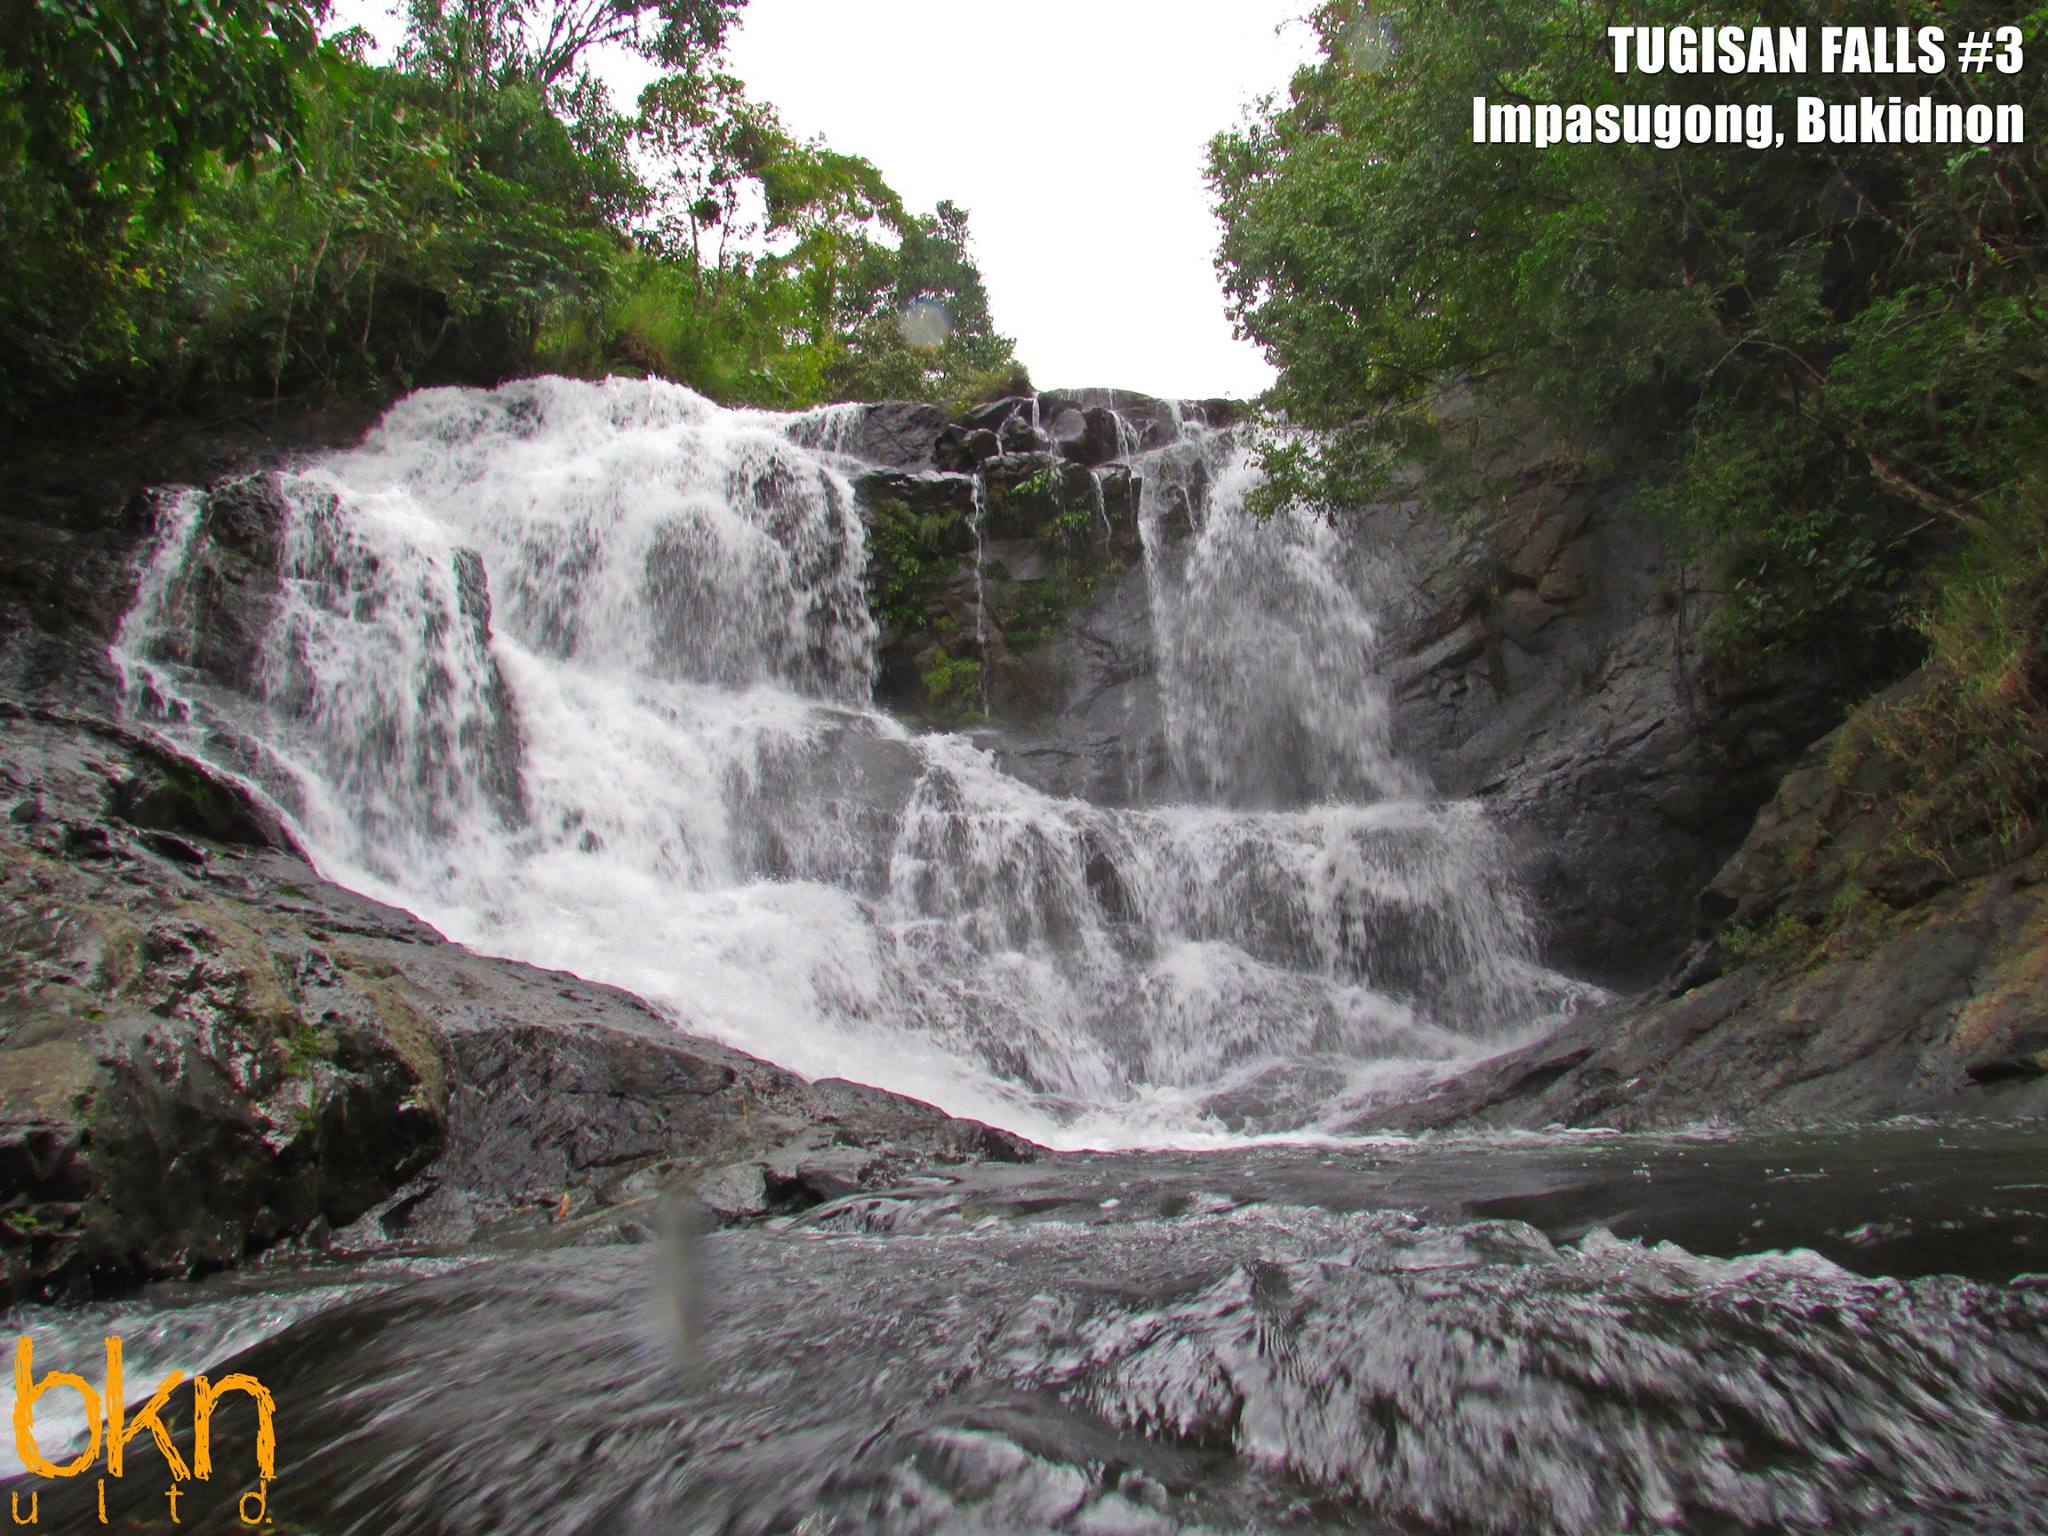 Tugisan Falls #3